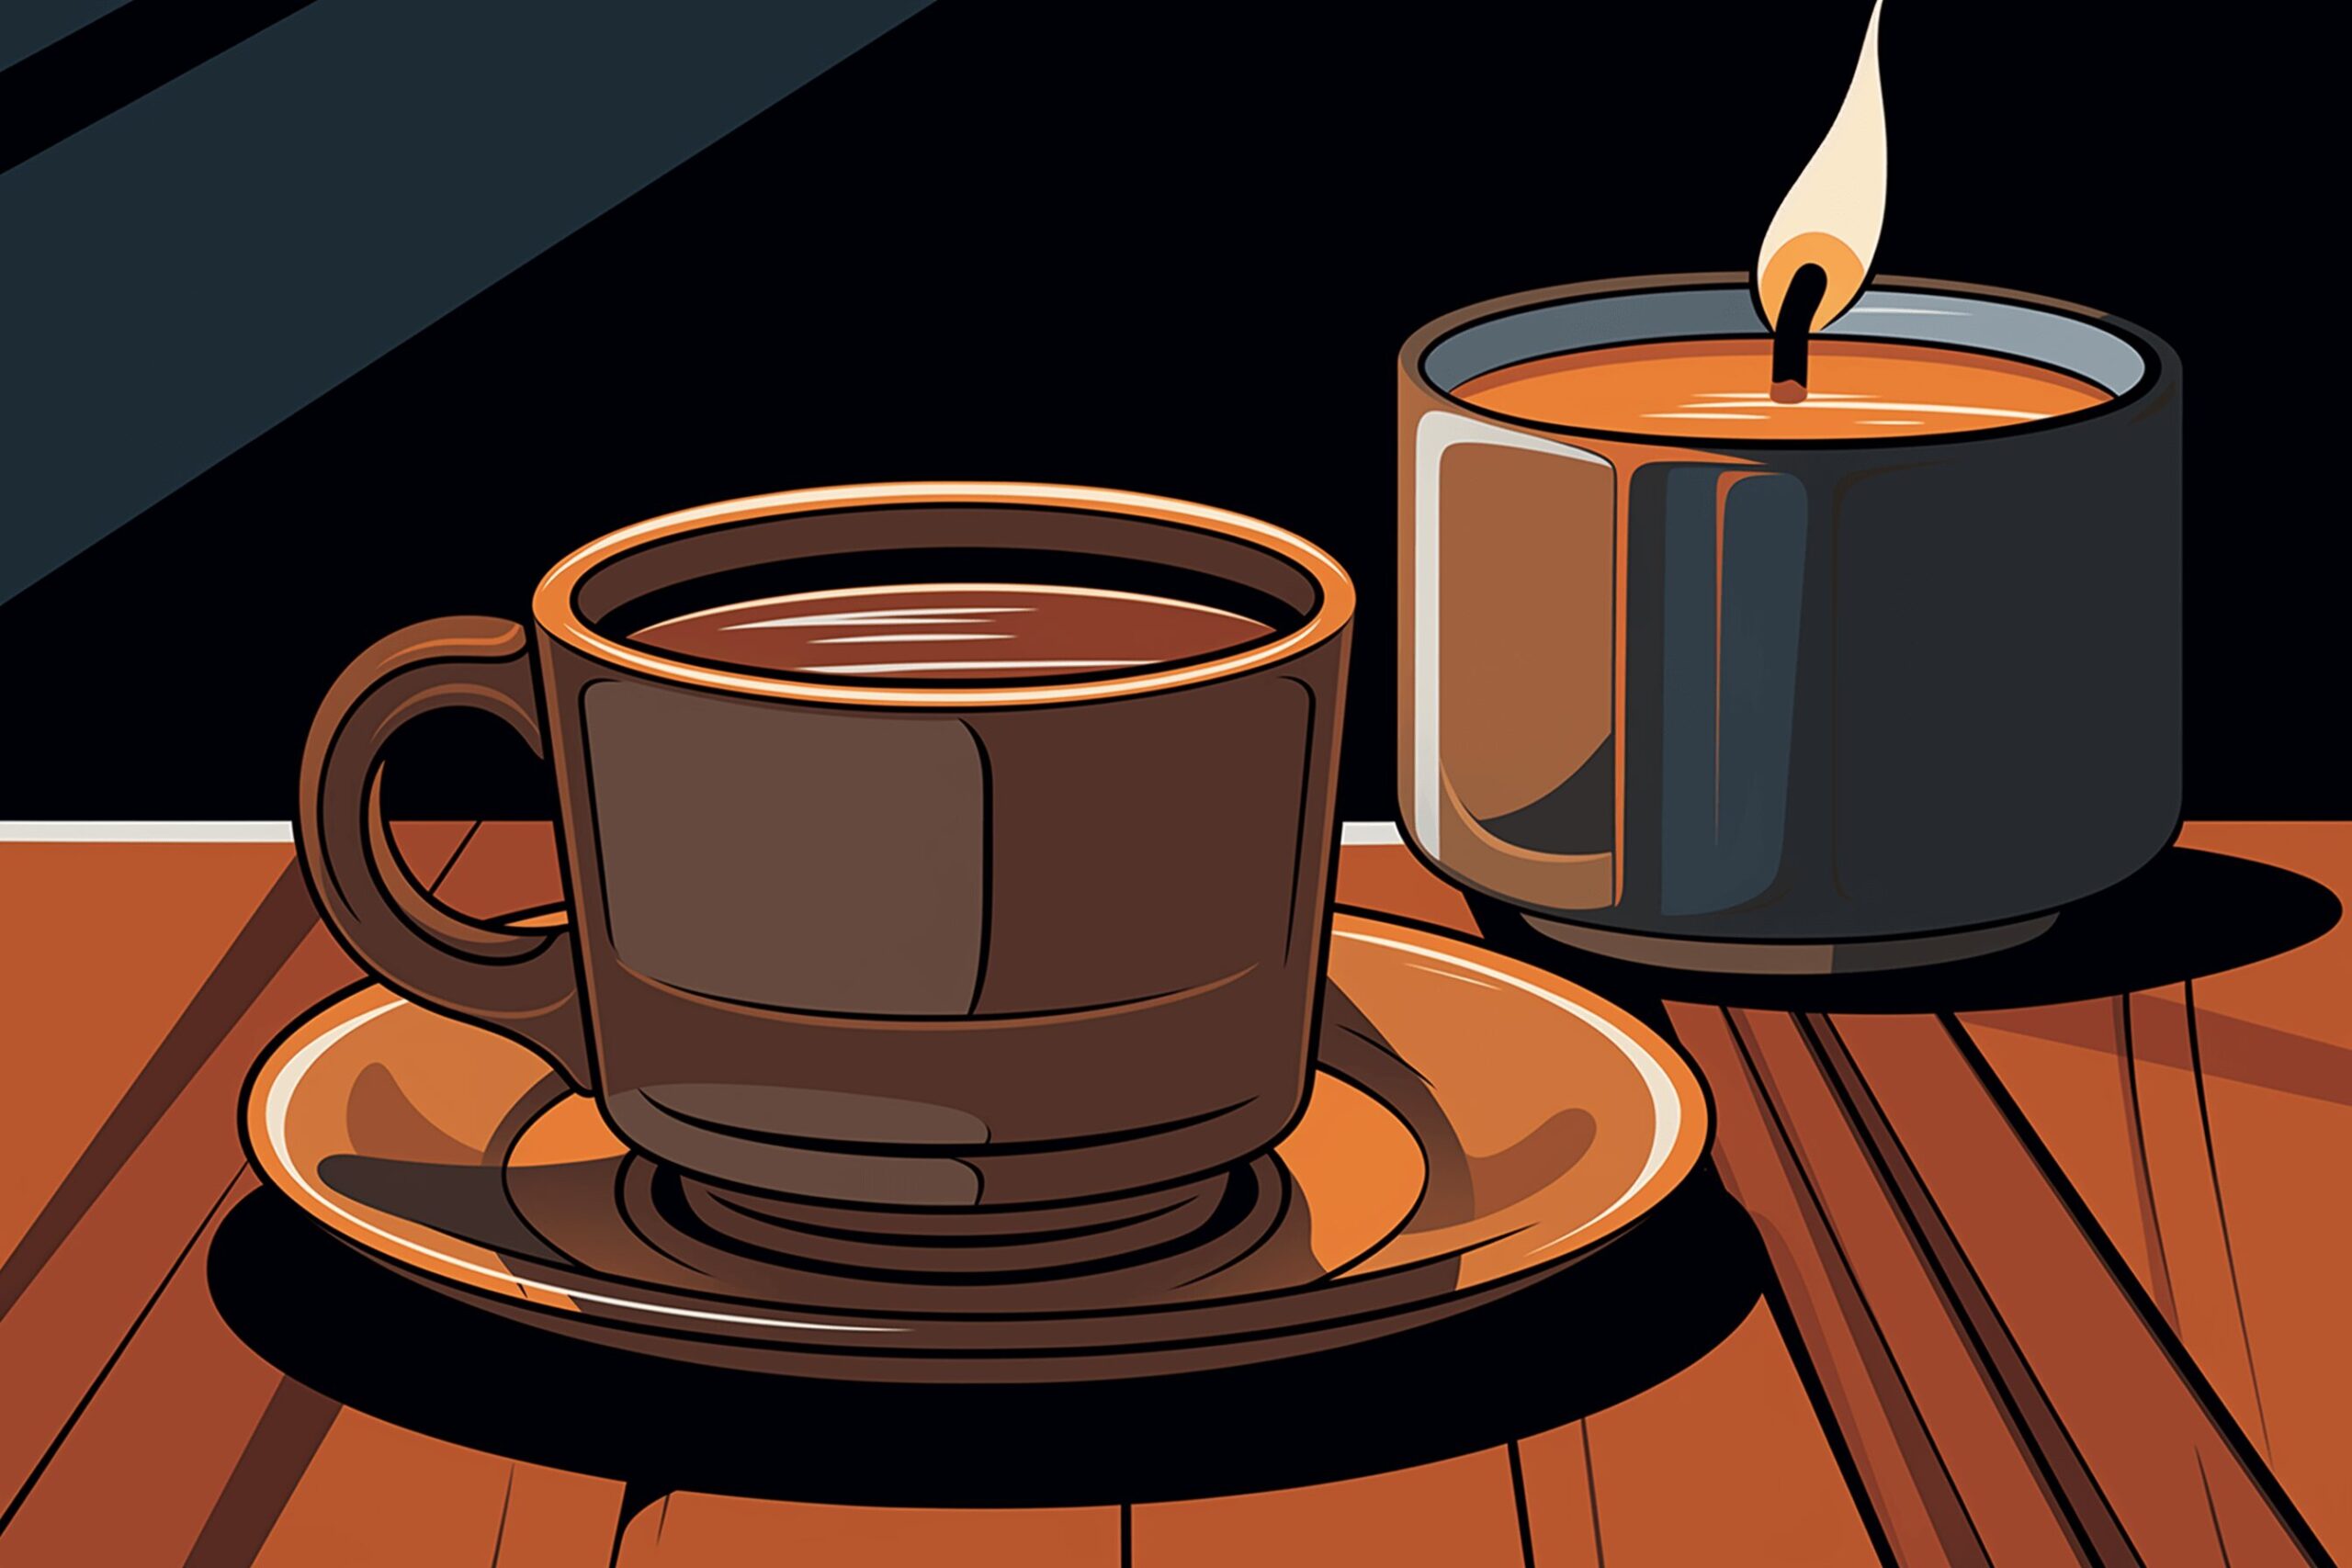 A candle and a mug of coffee